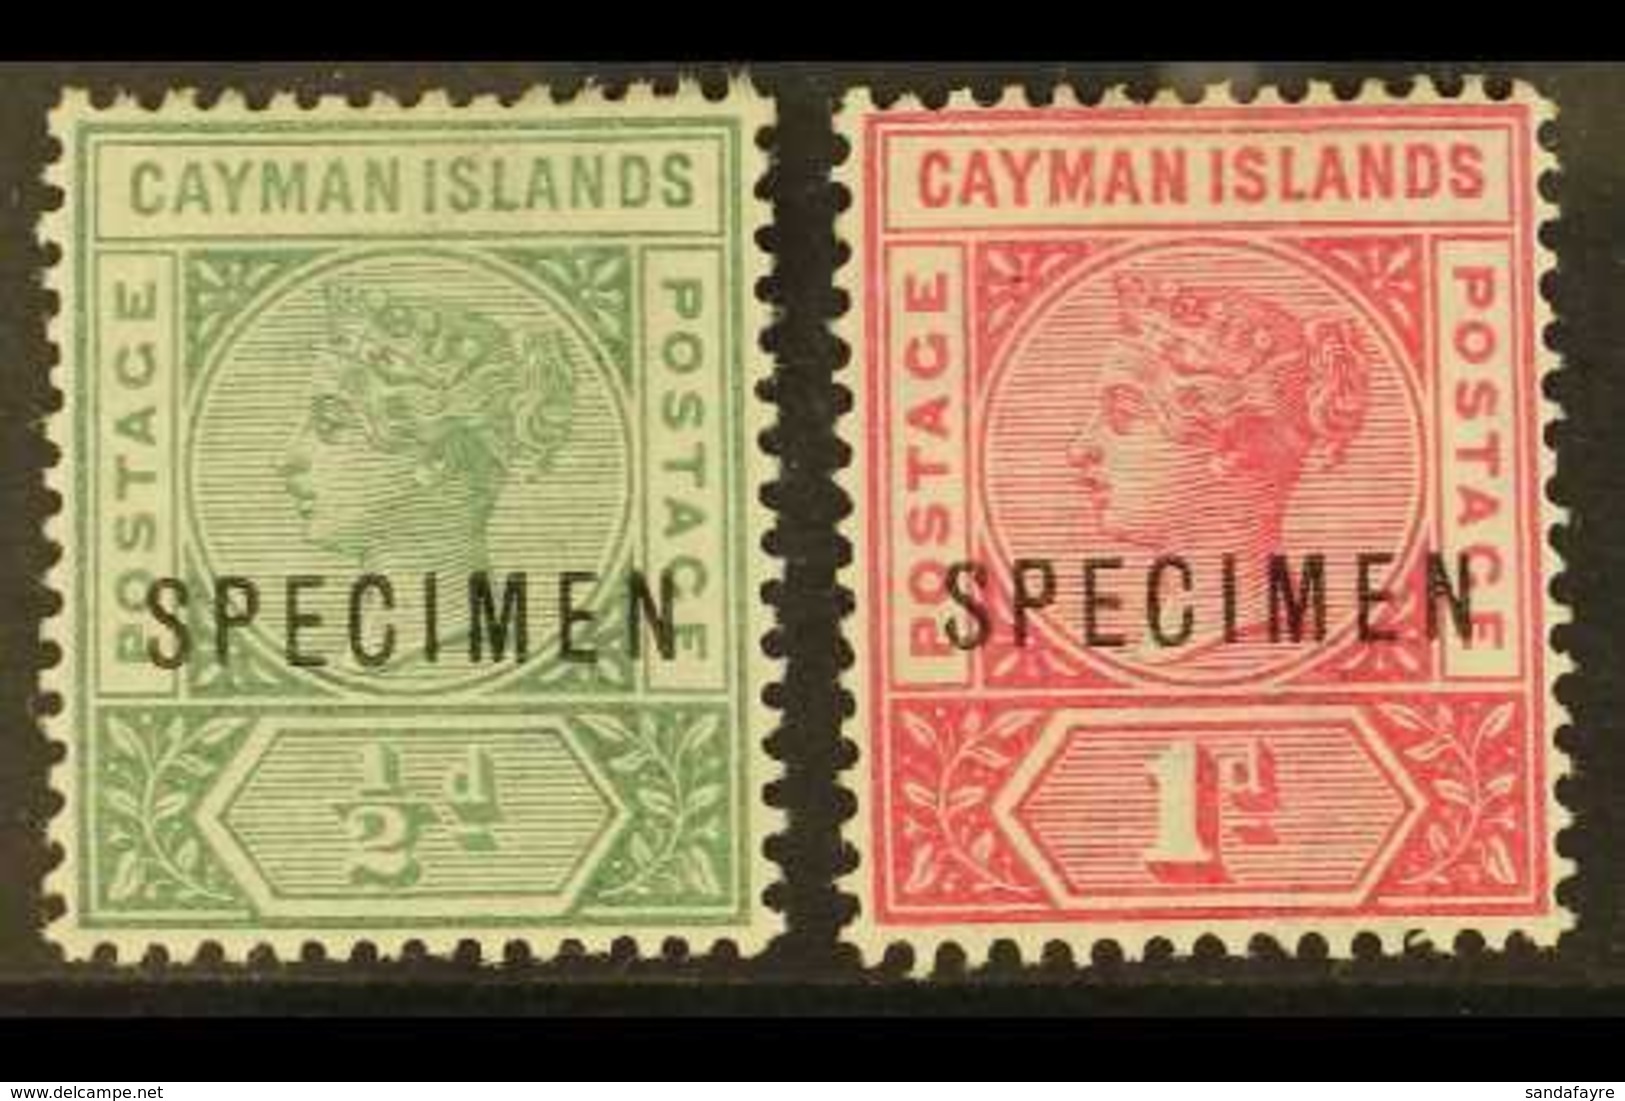 1900  ½d Green, 1d Rose-carmine, "SPECIMEN" Overprints, SG 1s/2s, Mint (2). For More Images, Please Visit Http://www.san - Cayman Islands